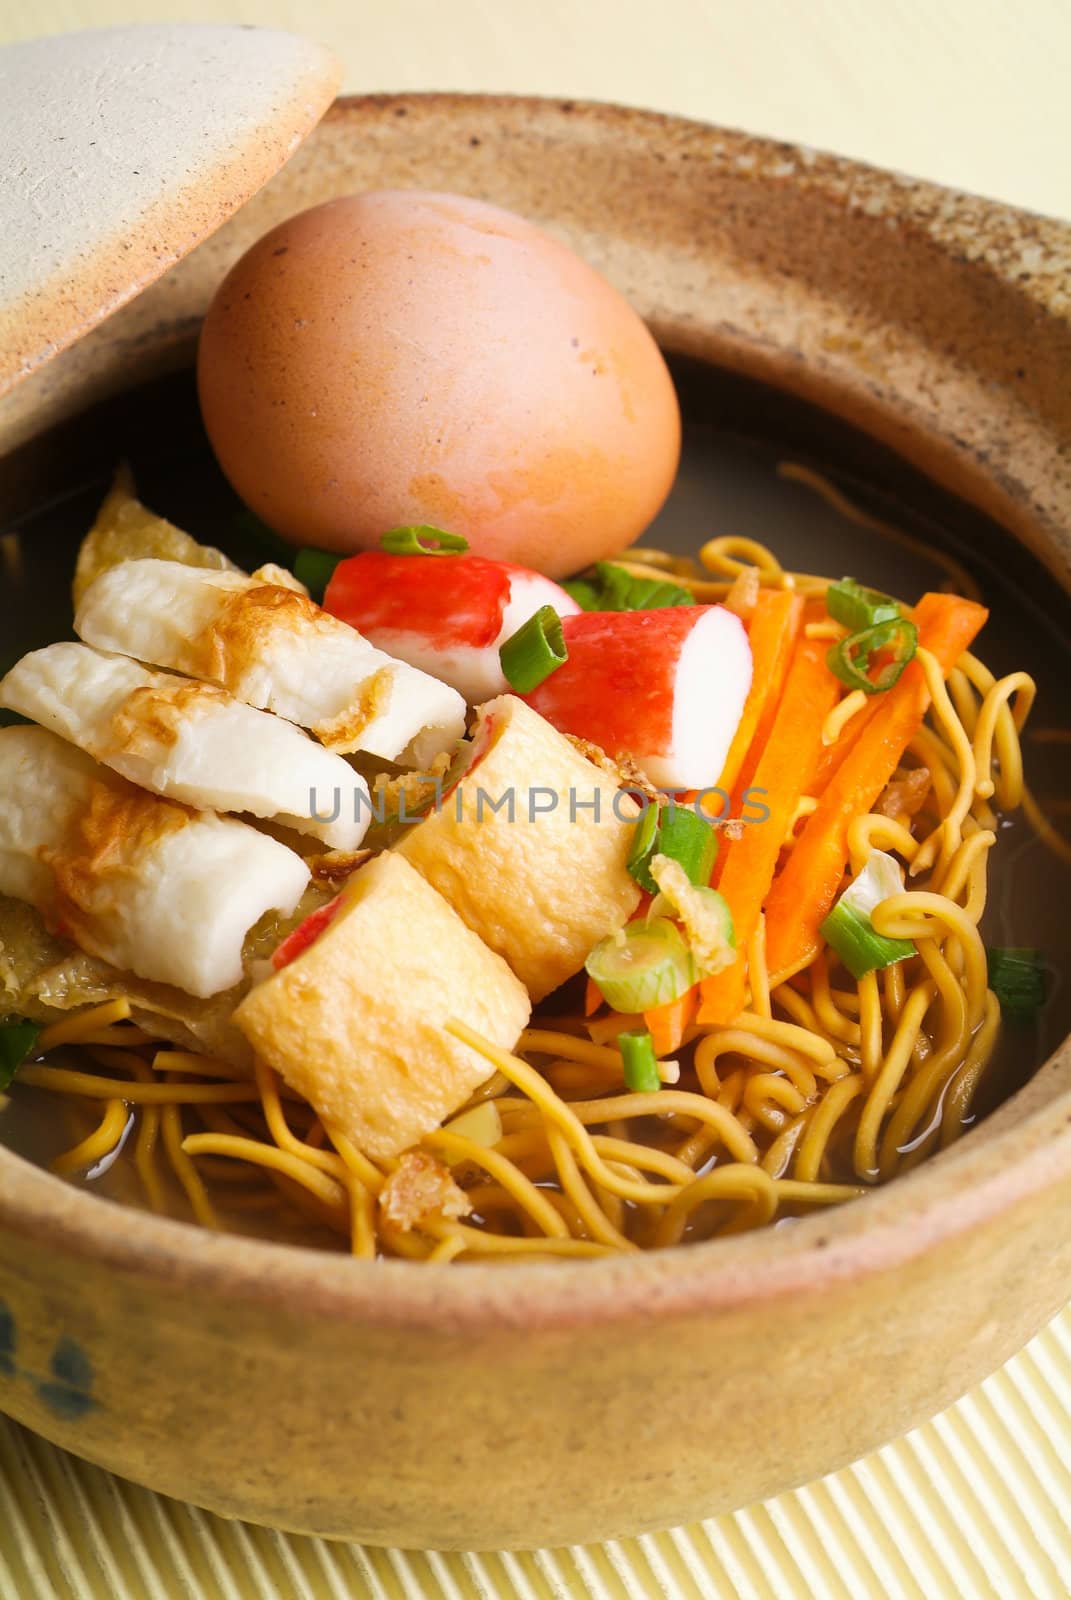 Claypo noodles. asia food by heinteh